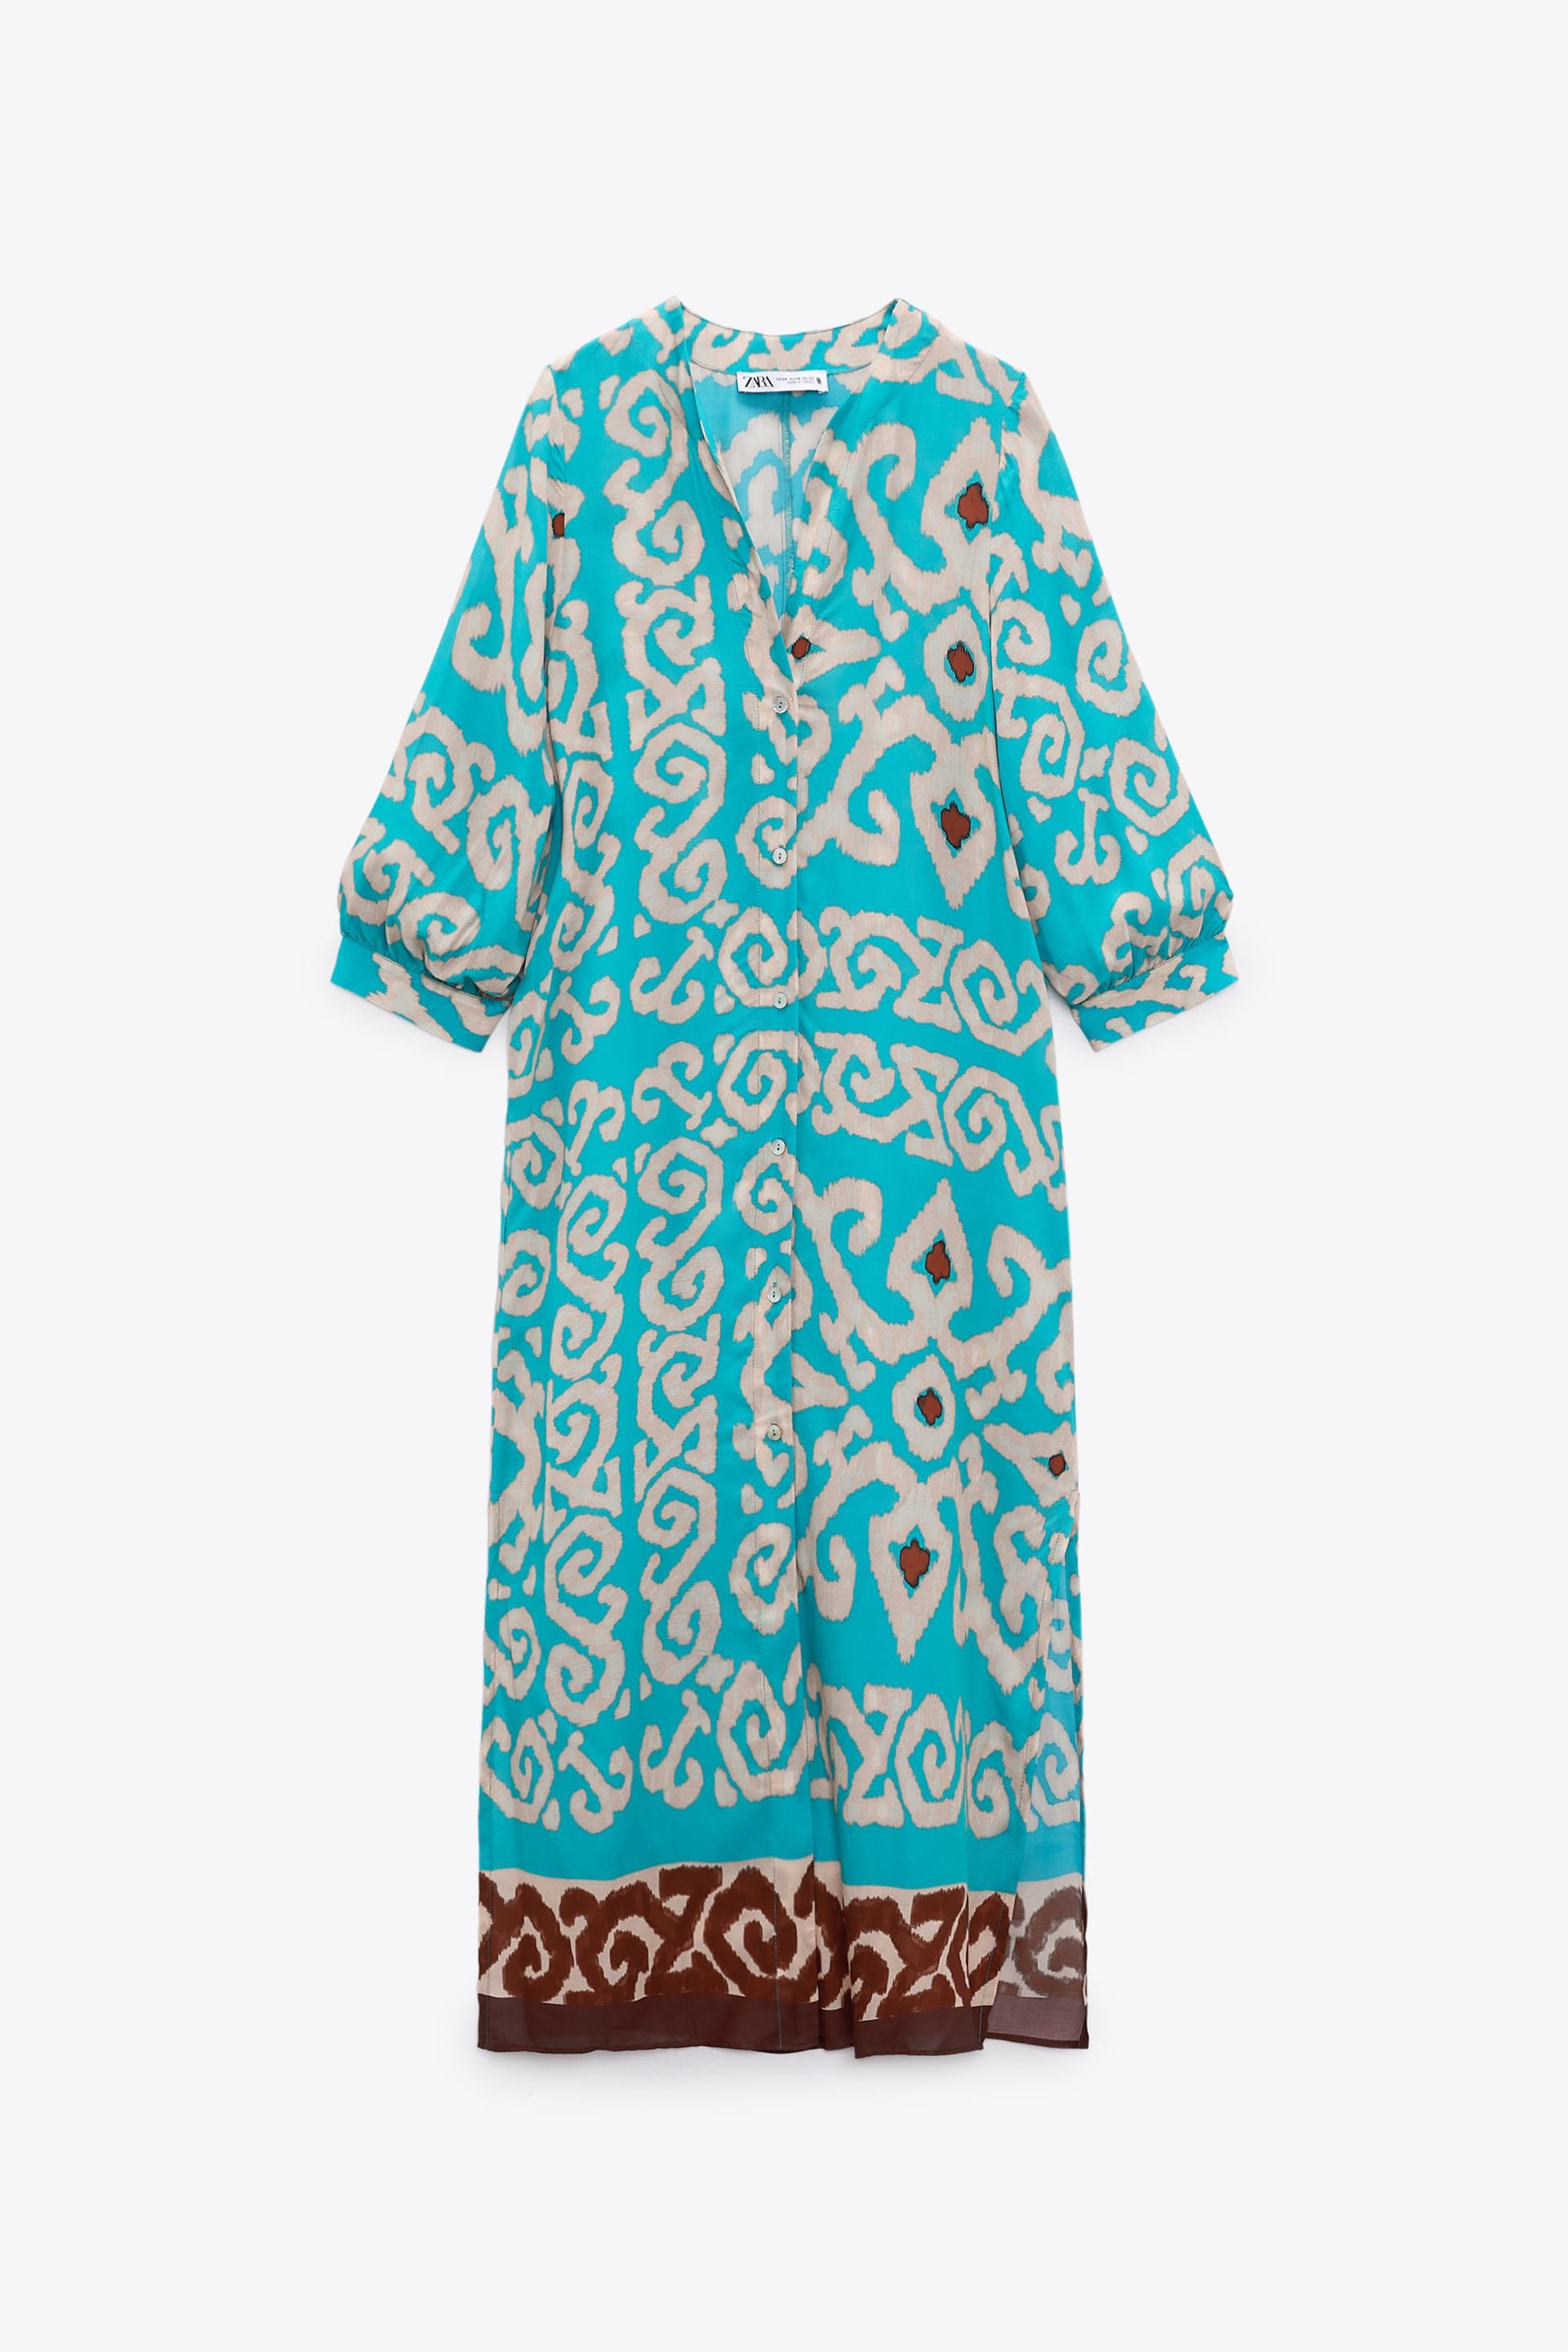 Zara Printed Tunic Midi Dress.jpg